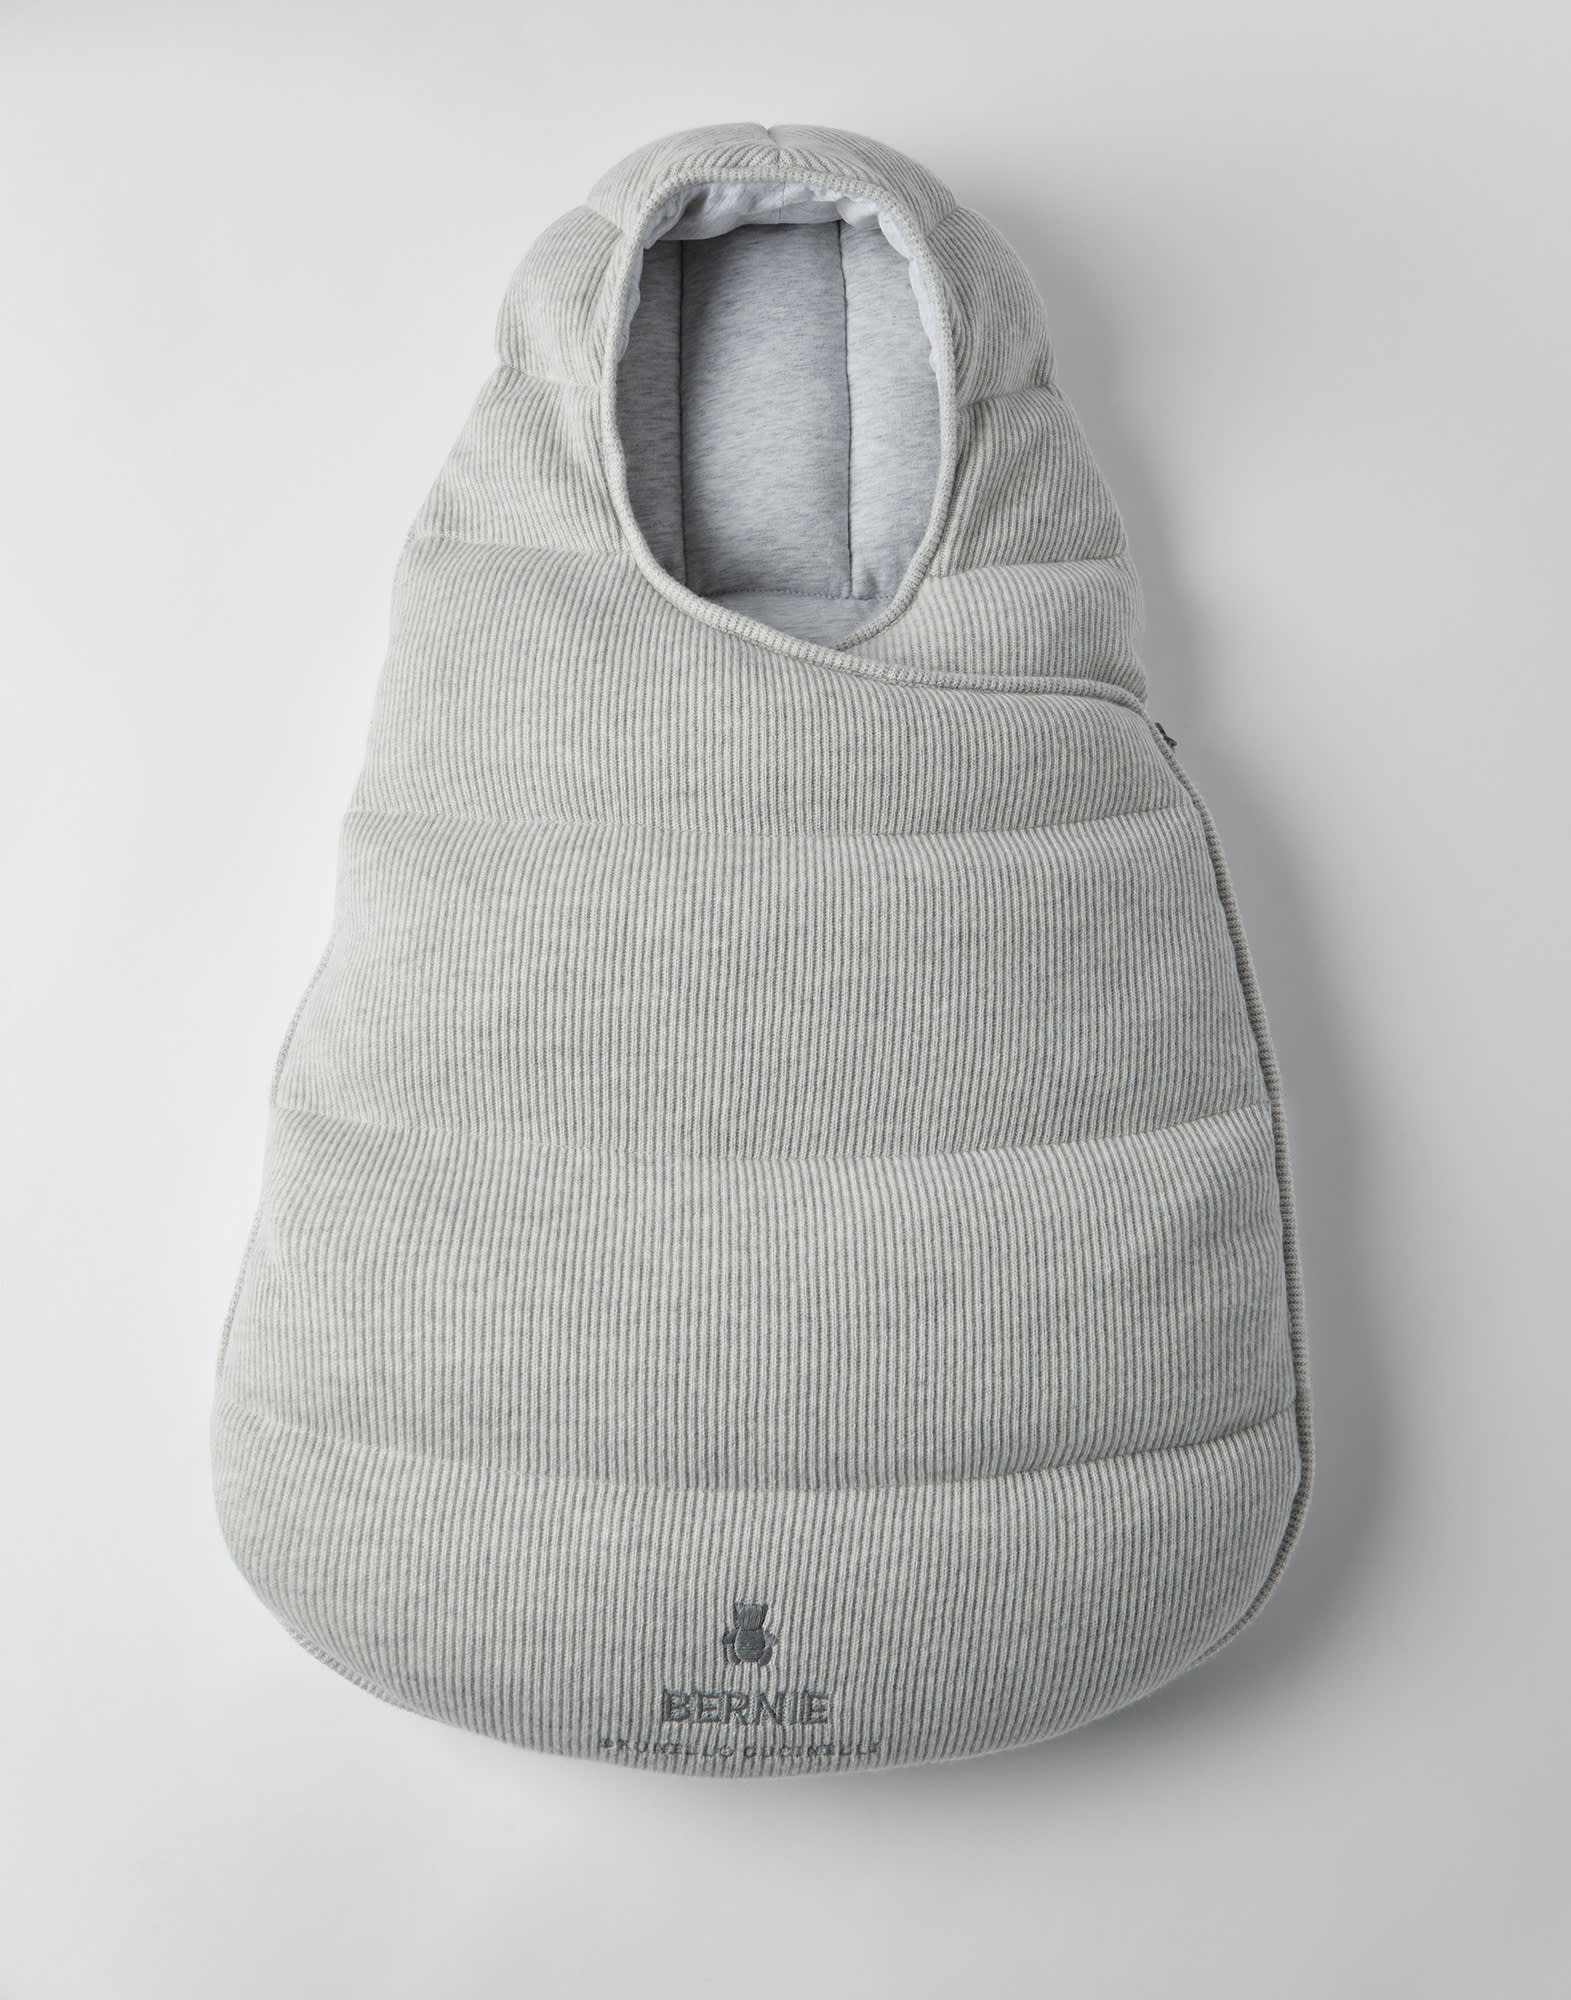 Bernie Infant Sleep Bag